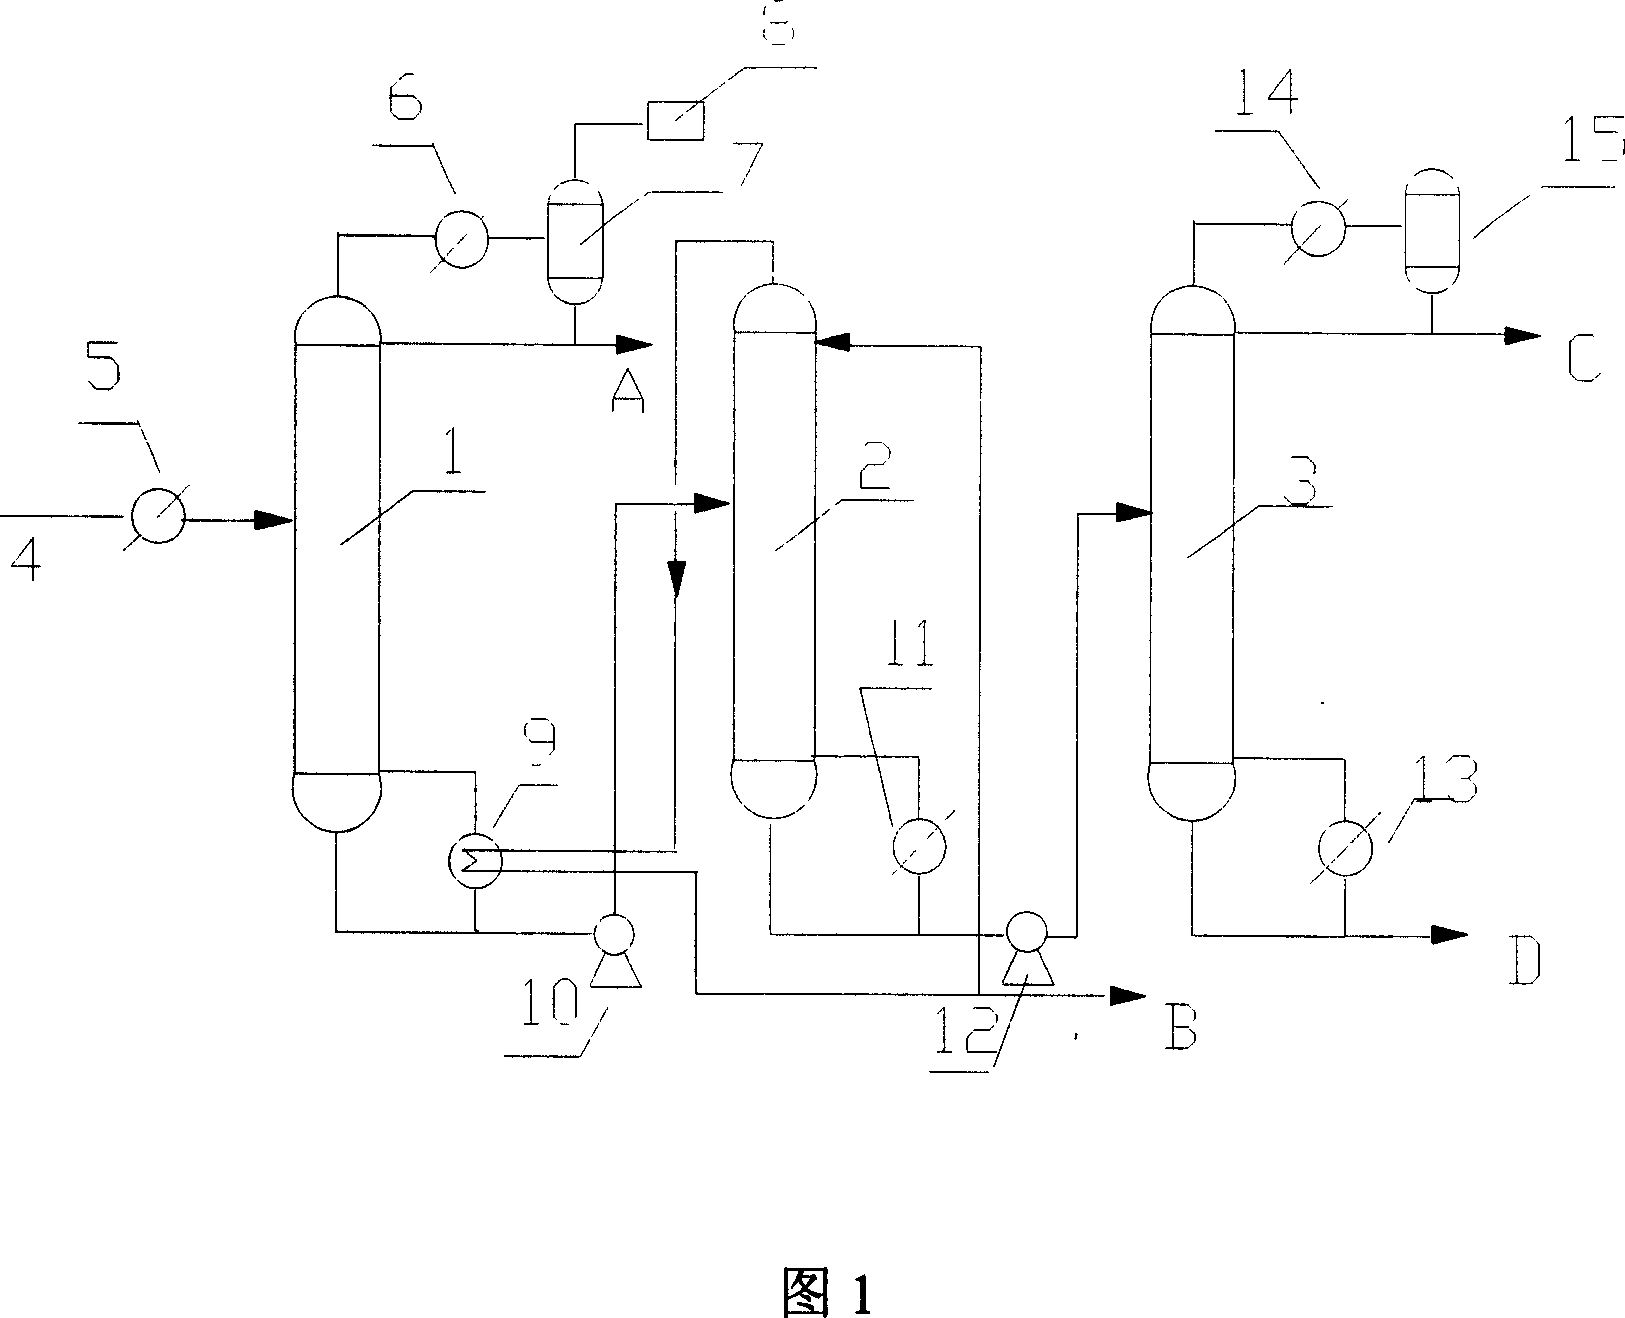 Serial trimethyl benzene separating apparatus and method